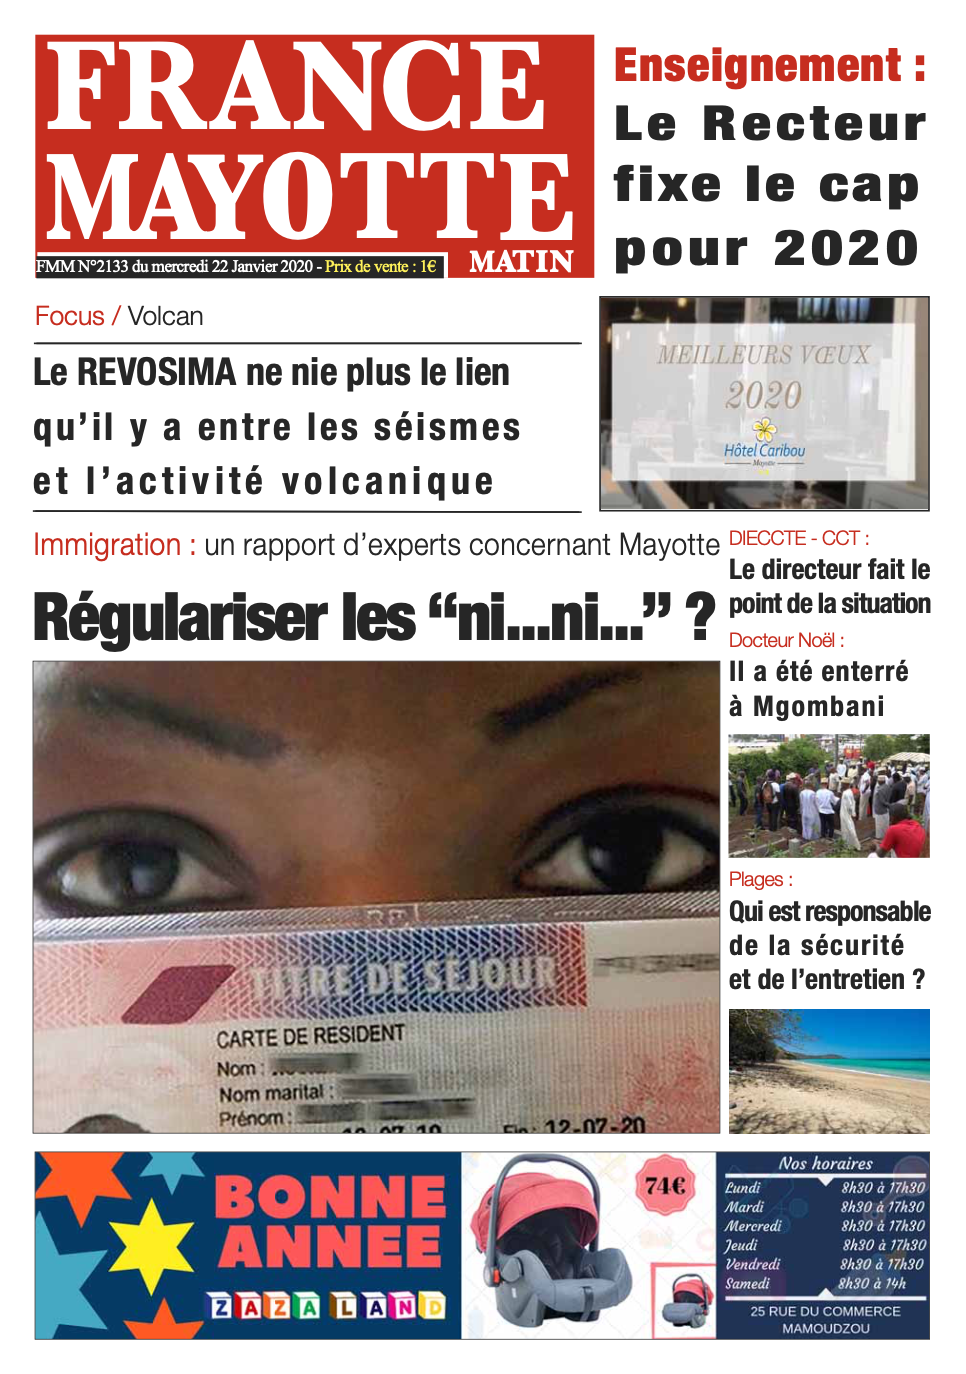 France Mayotte Mercredi 22 janvier 2020